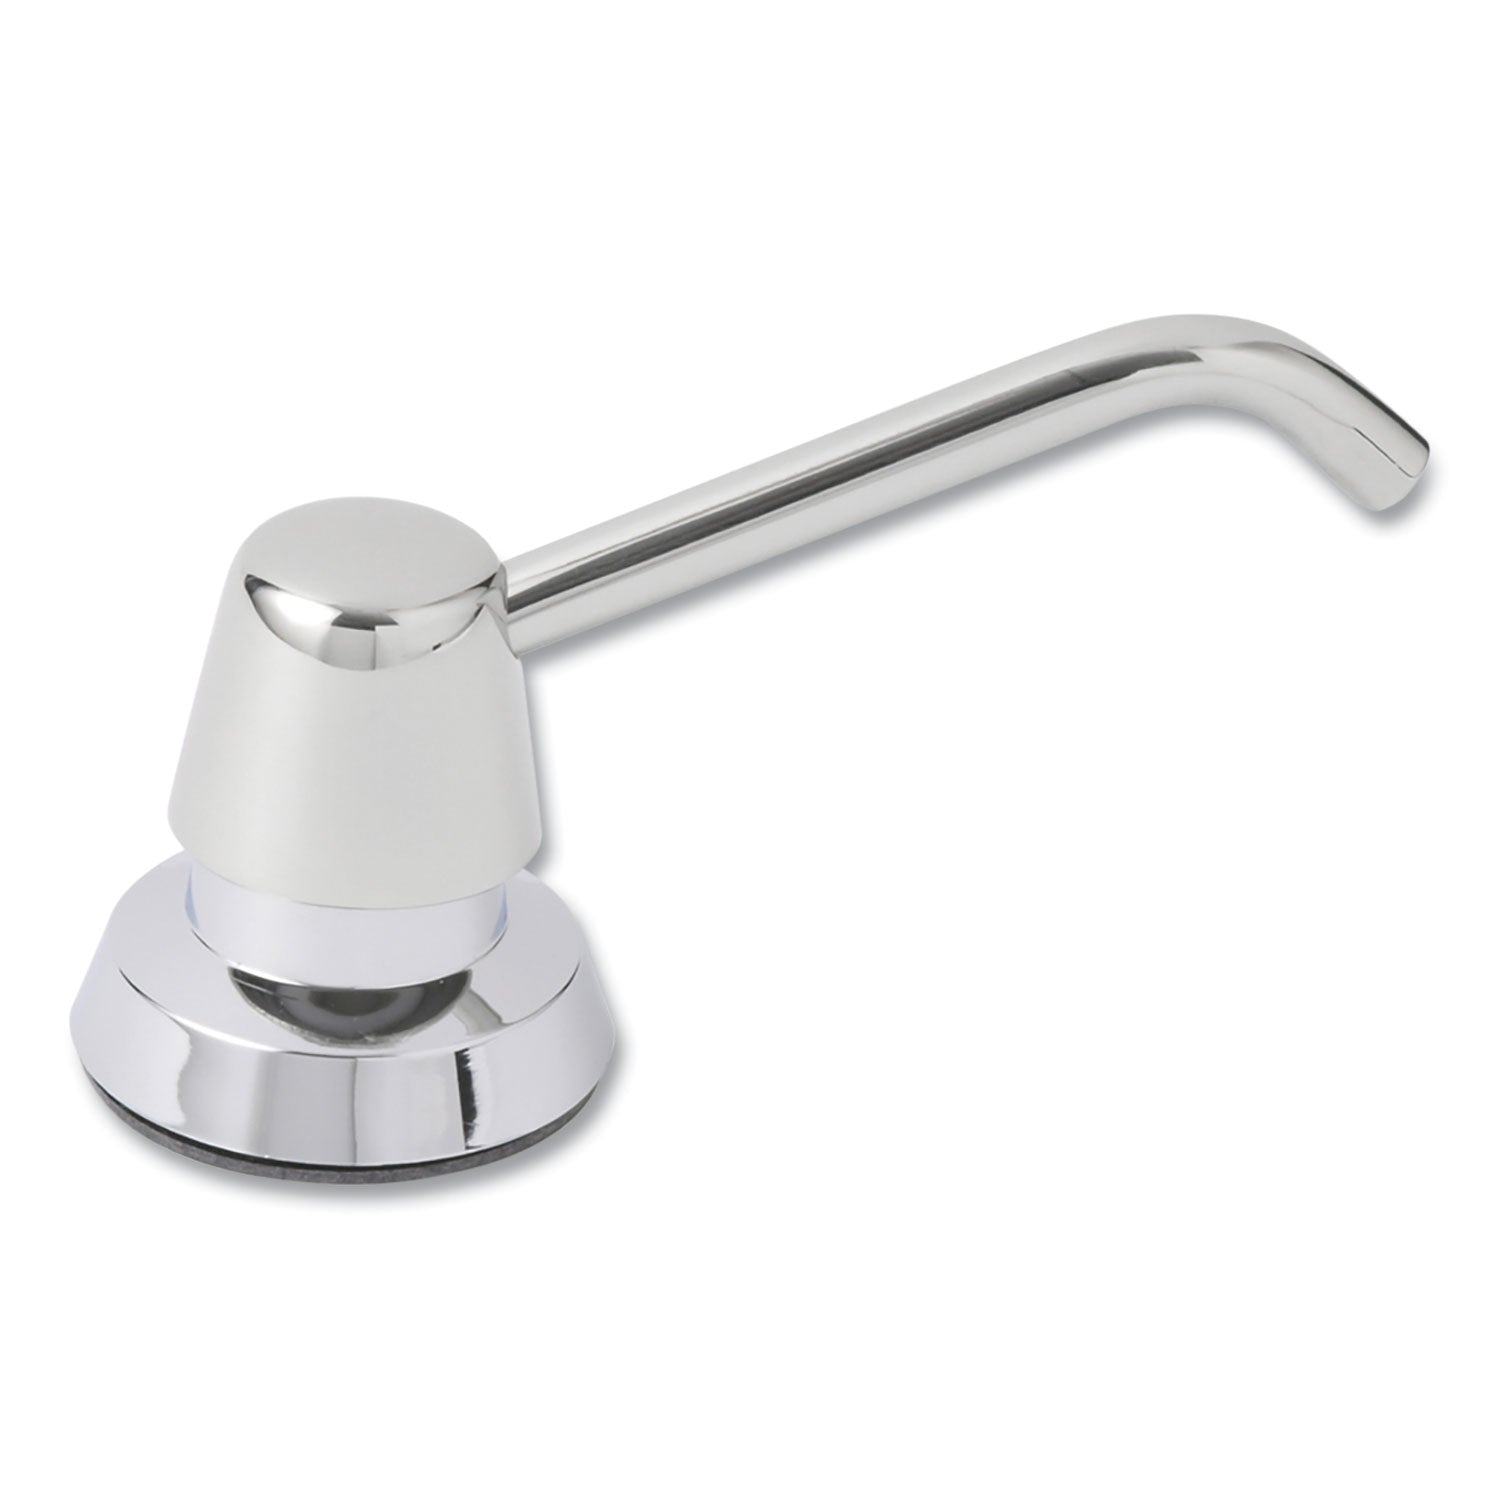 Contura Lavatory-Mounted Soap Dispenser, 34 oz, 3.31 x 4 x 17.63, Chrome/Stainless Steel - 